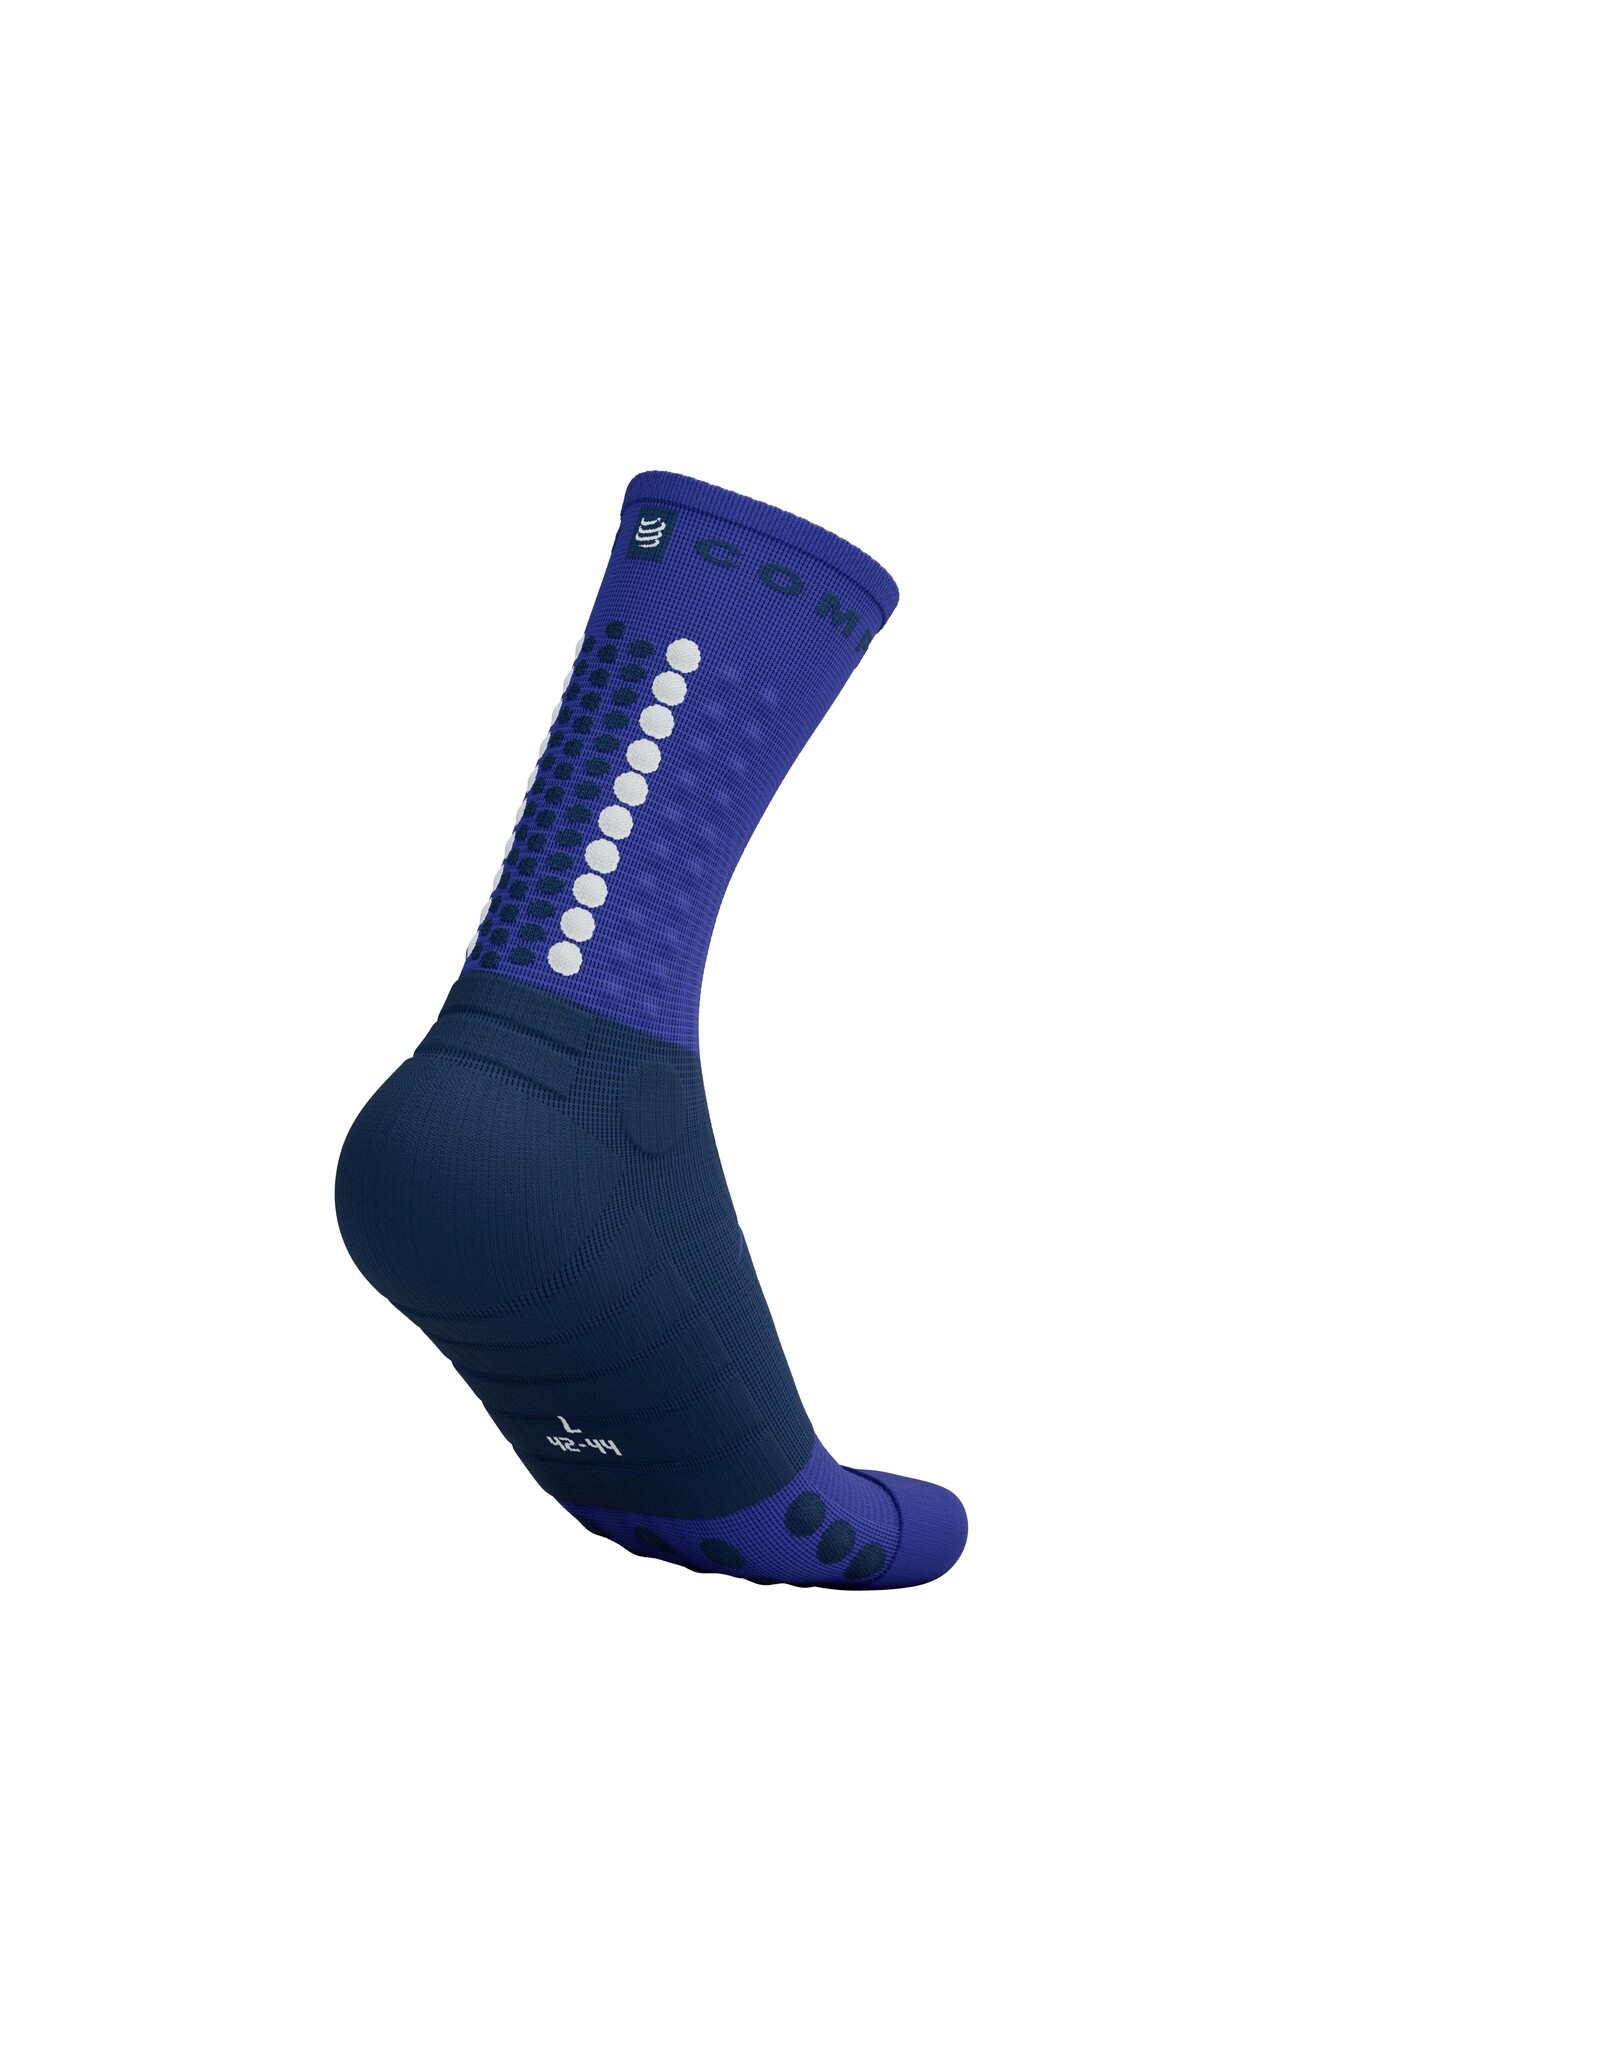 Compressport Ultra Trail  Socks V2.0 - Dazzling Blue/Dress Blues/White